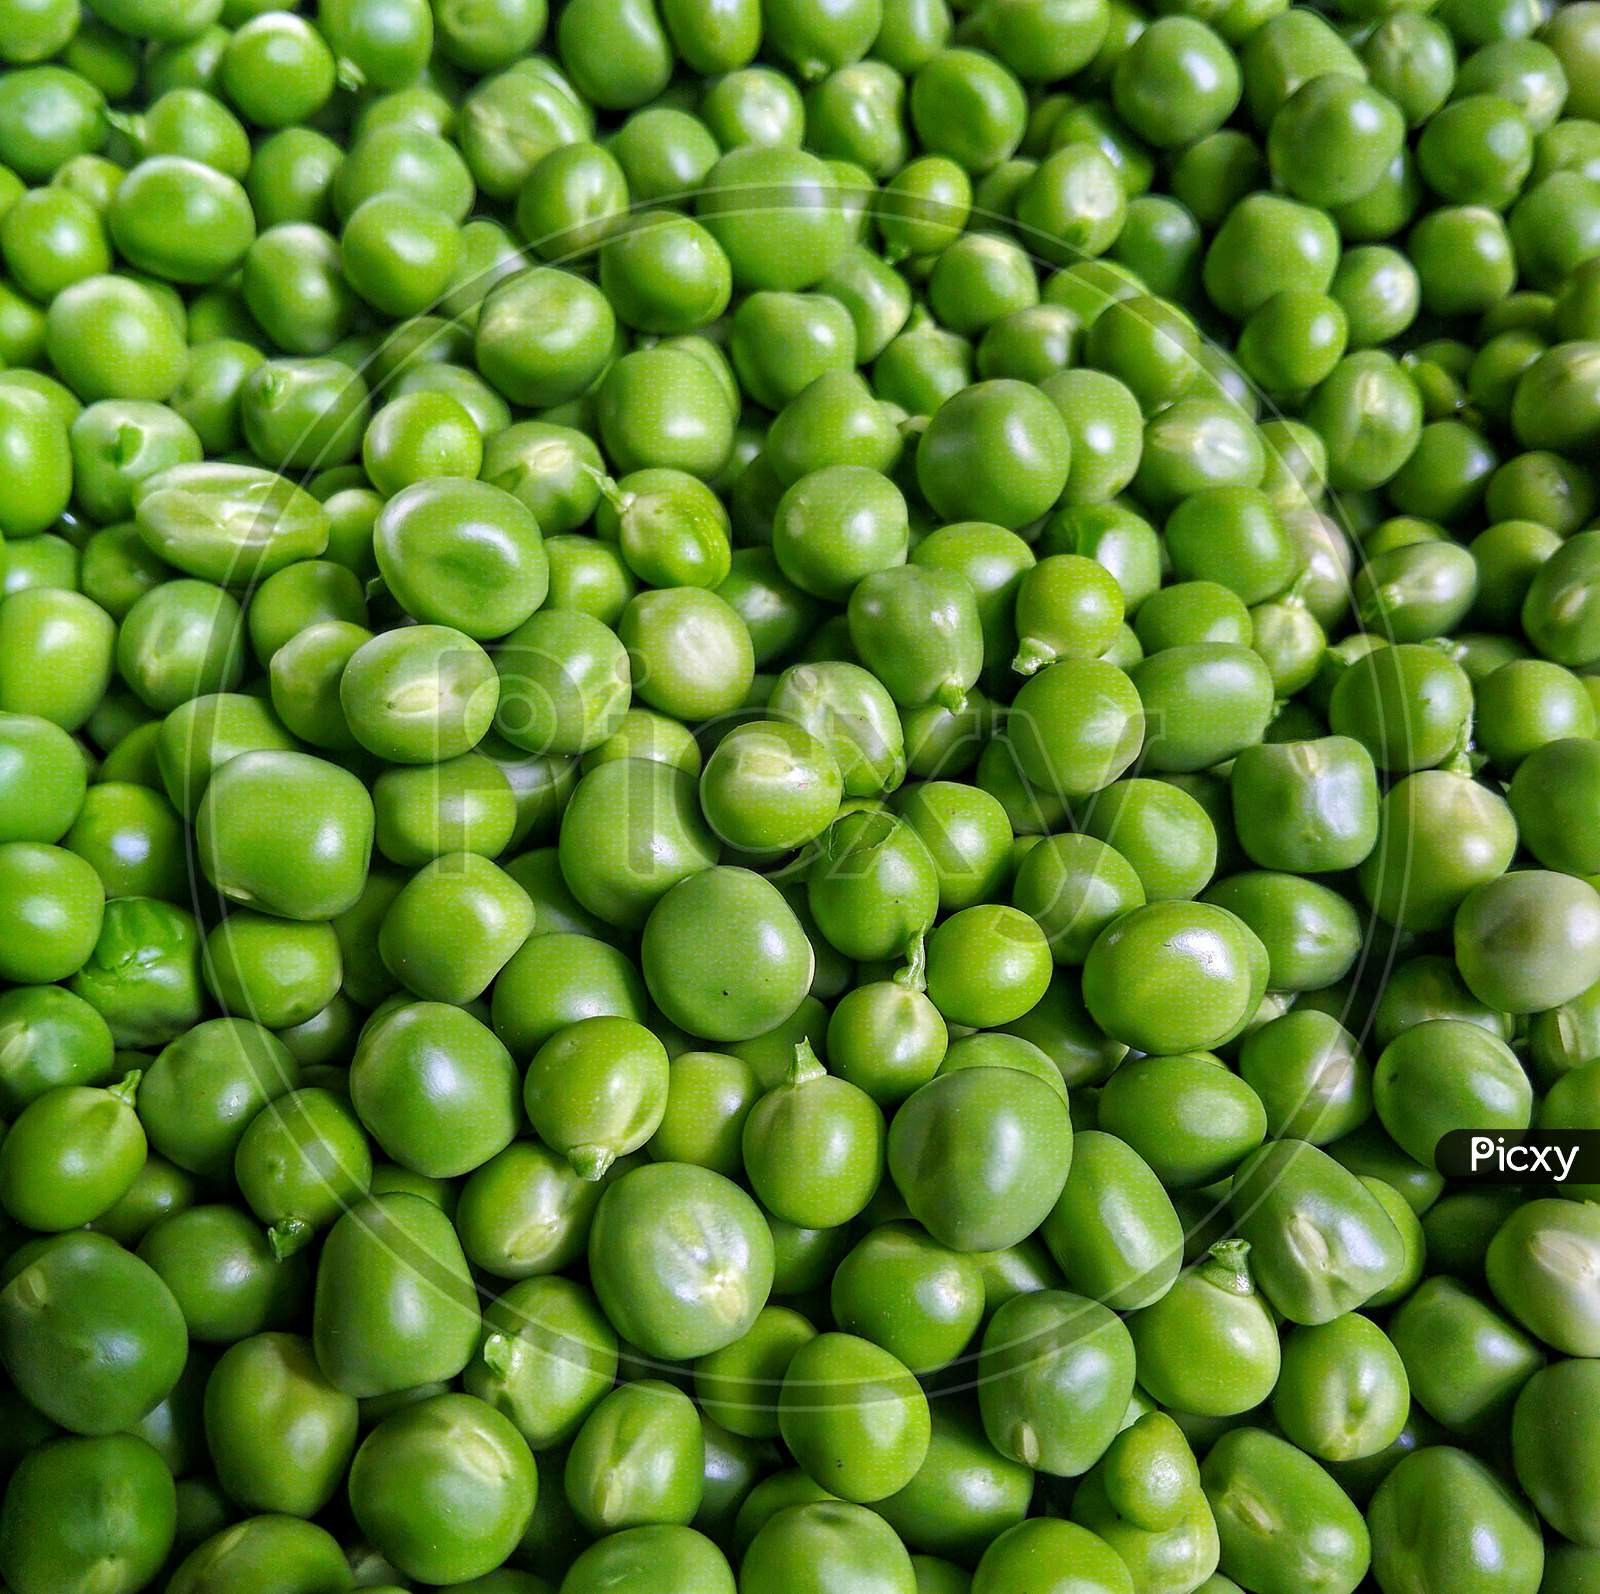 Green beans korai suti Lin local language